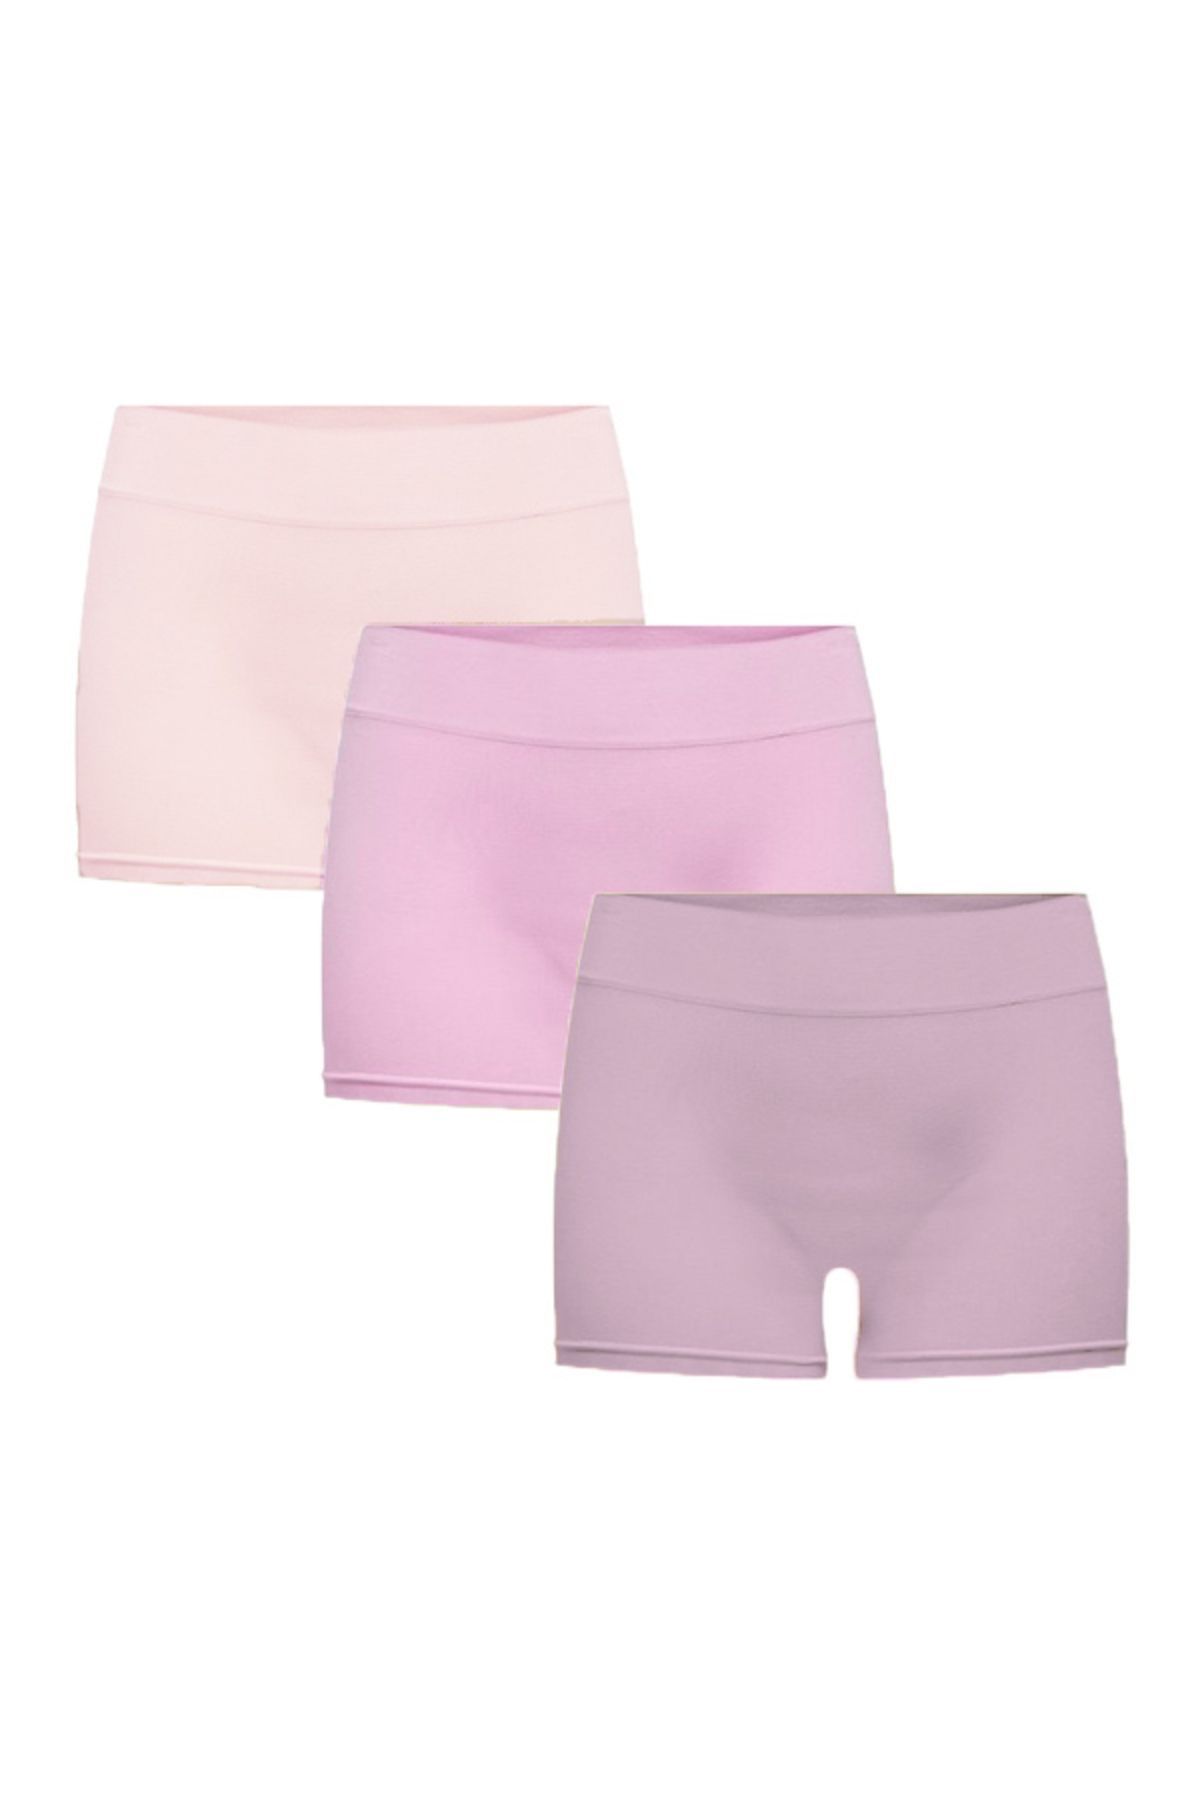 FOREVER MORE Boxer Shorts - Pink - Solid color - Trendyol